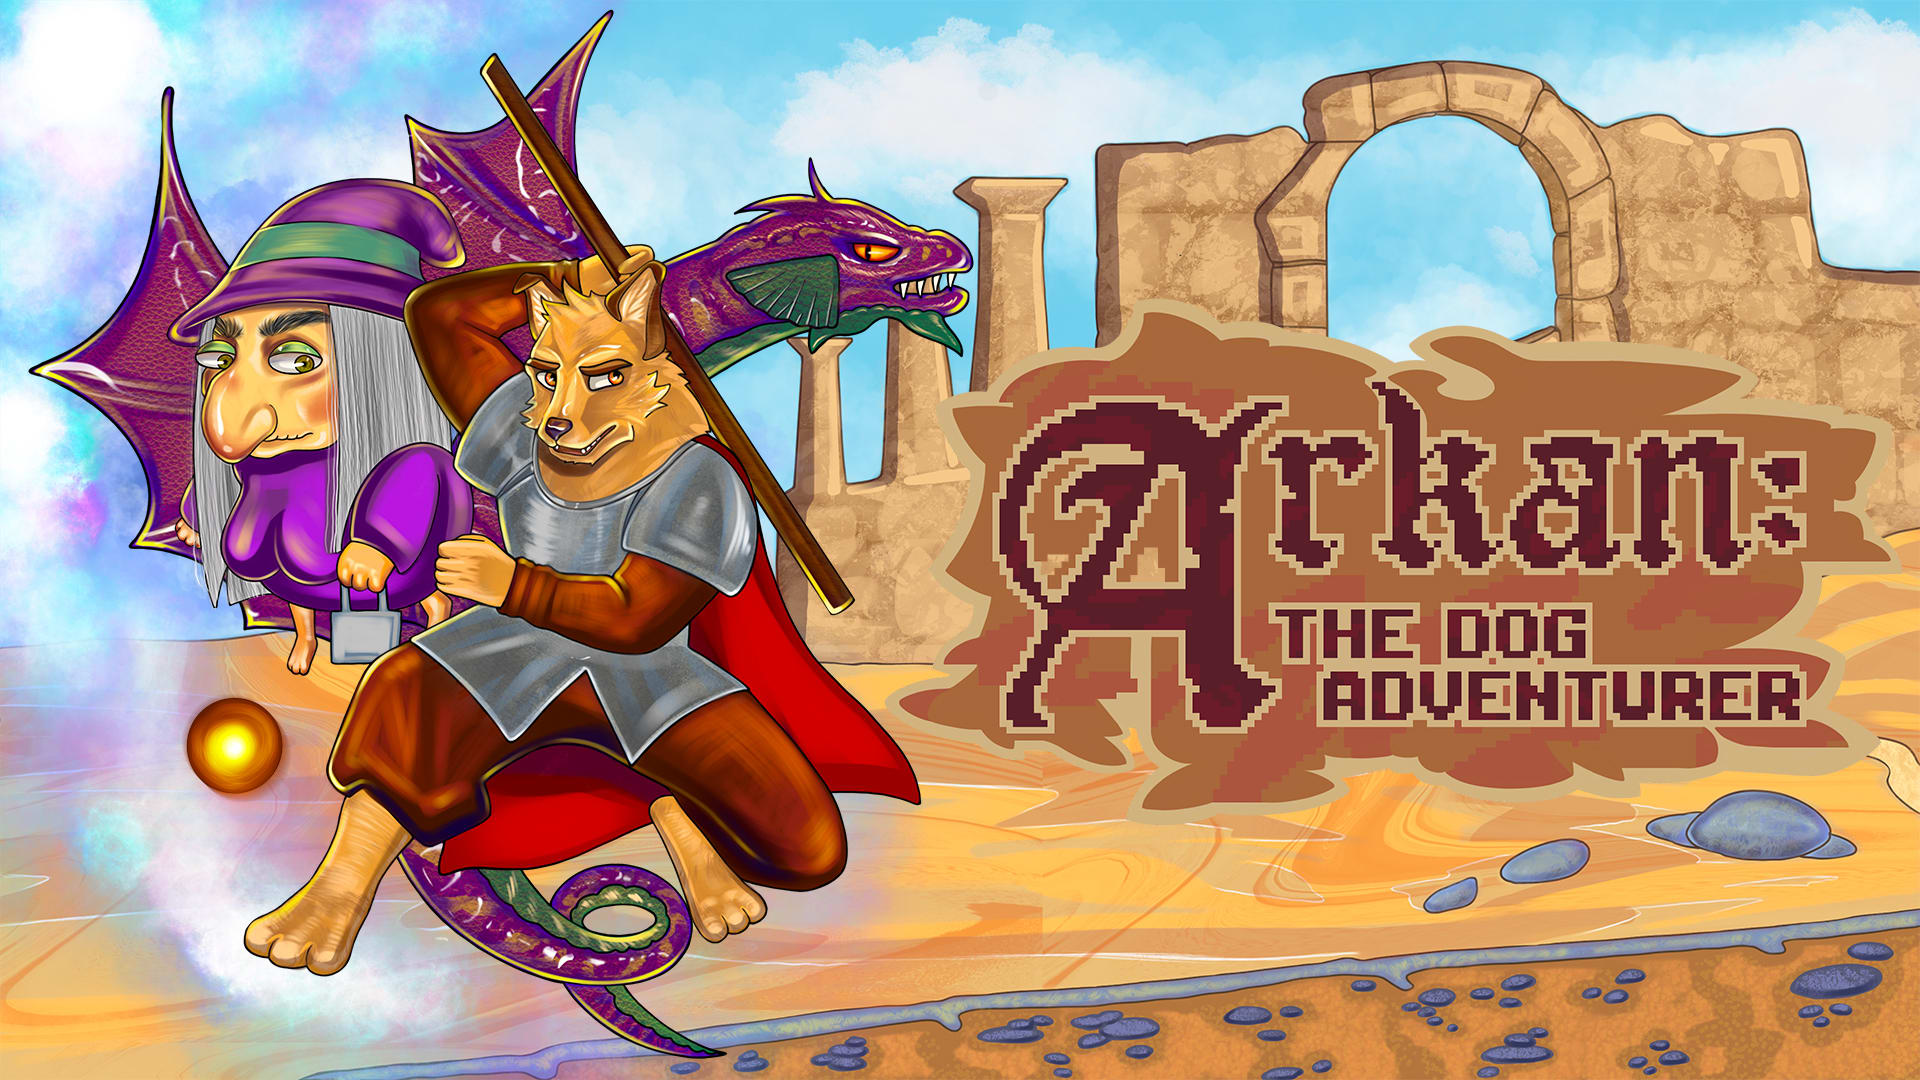 Arkan: The dog adventurer